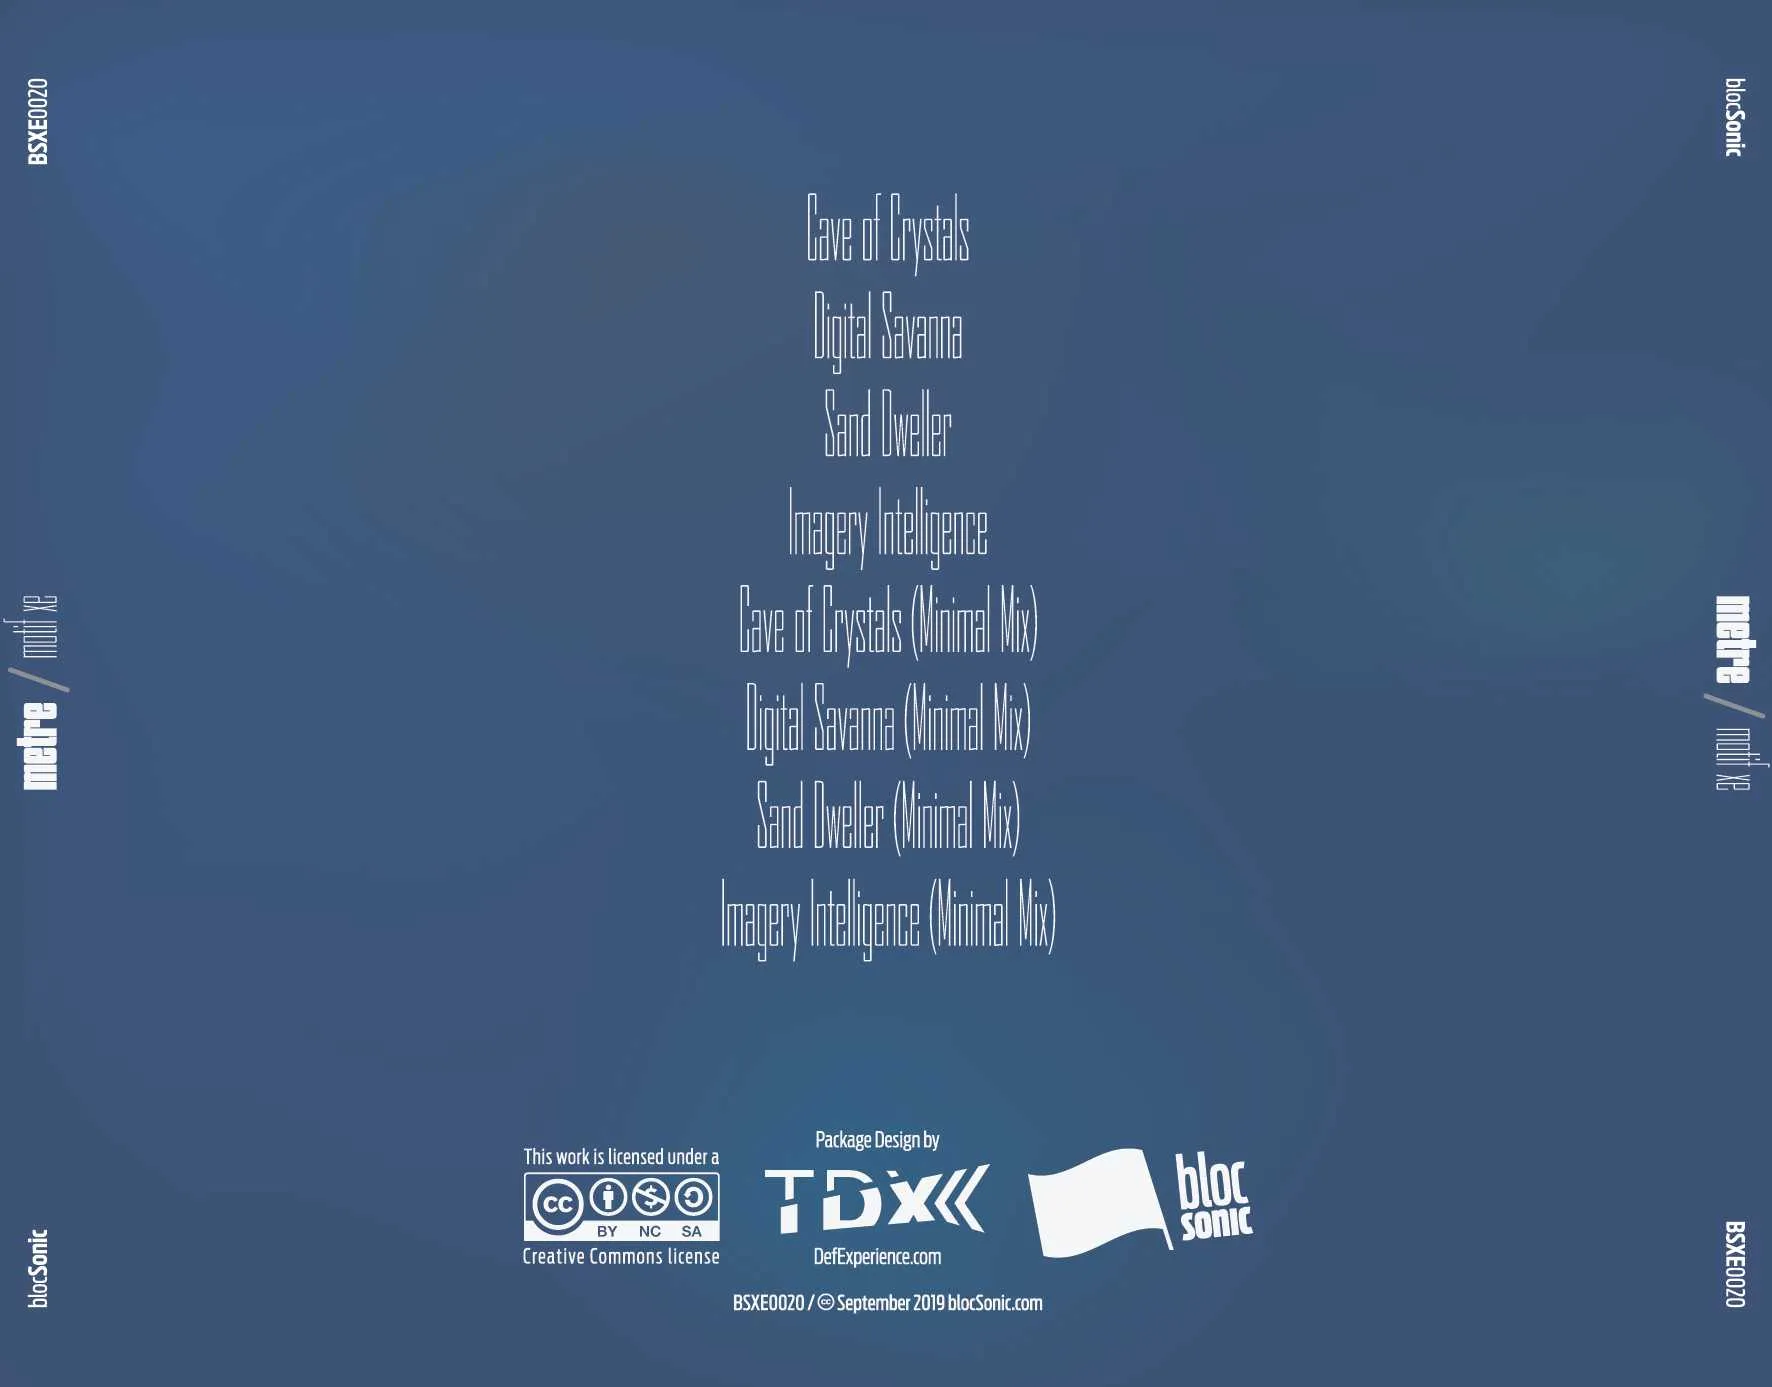 Album traycard for “Motif XE” by Metre